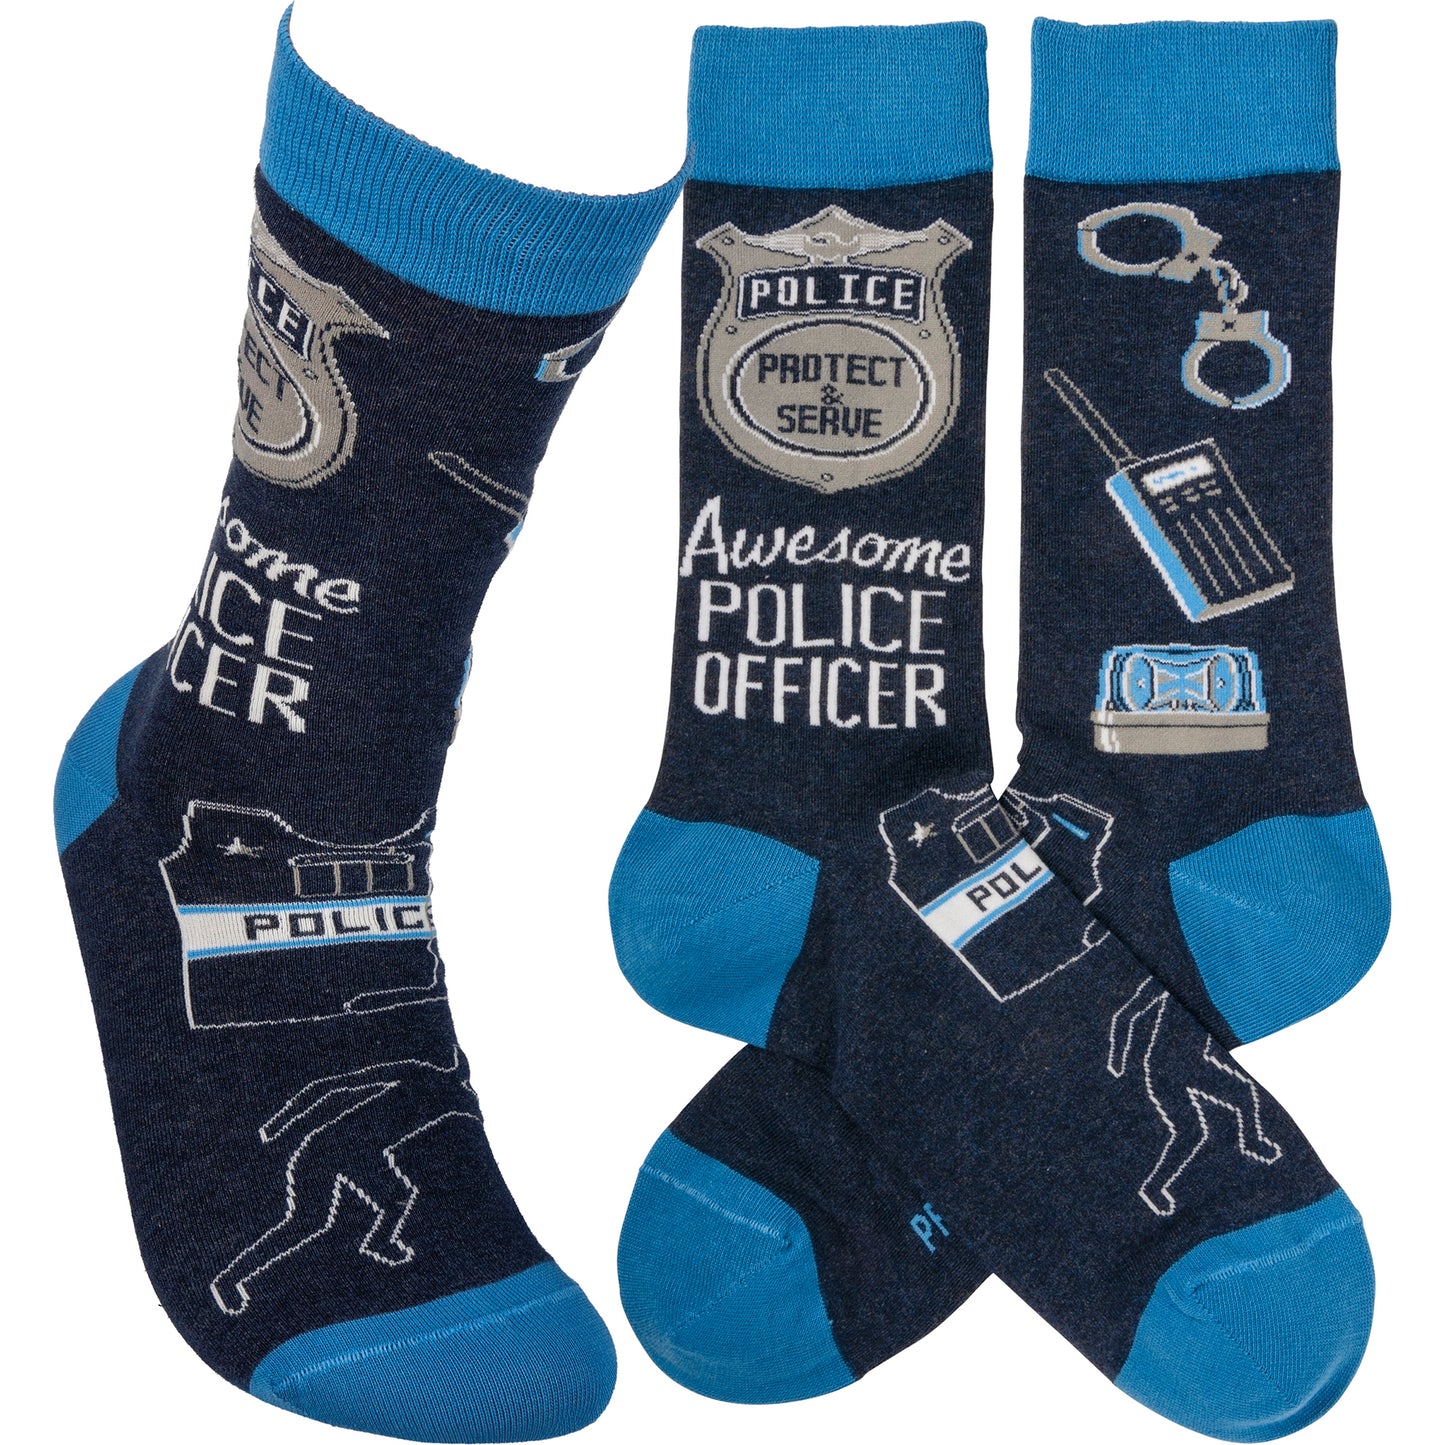 Socks Awesome Police Officer 109631